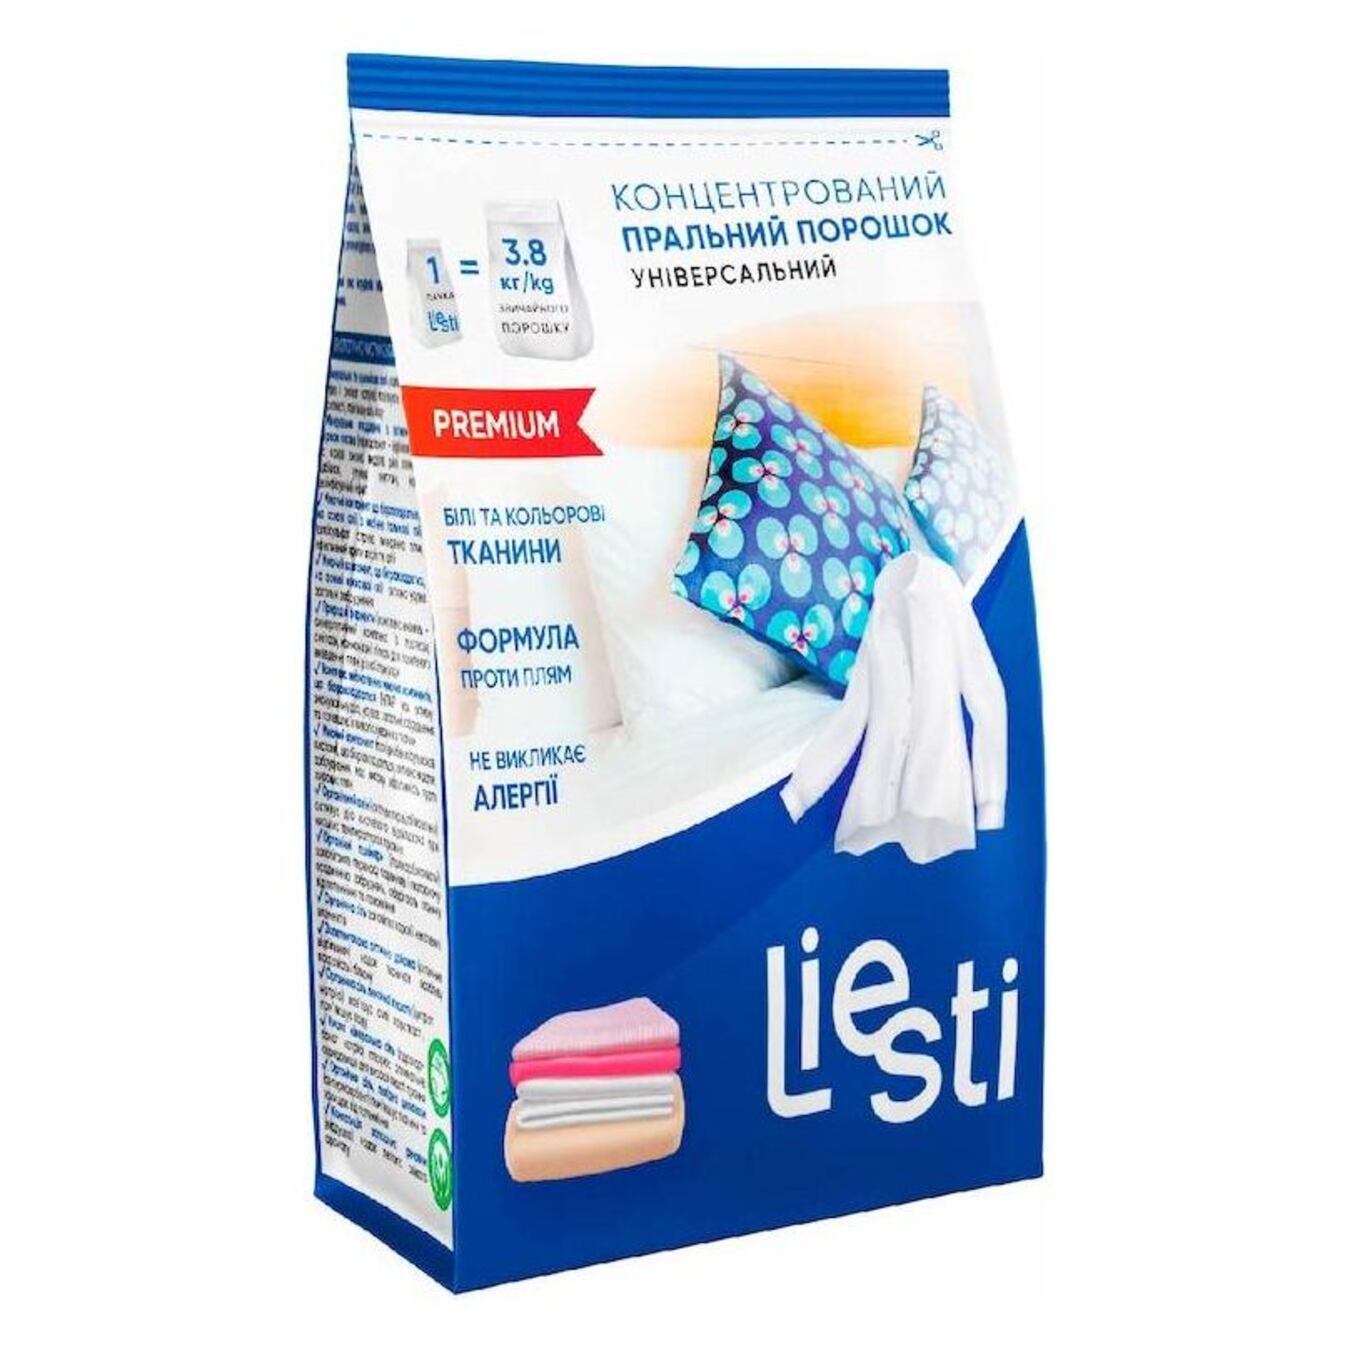 Liesti washing powder concentrated Universal 1kg